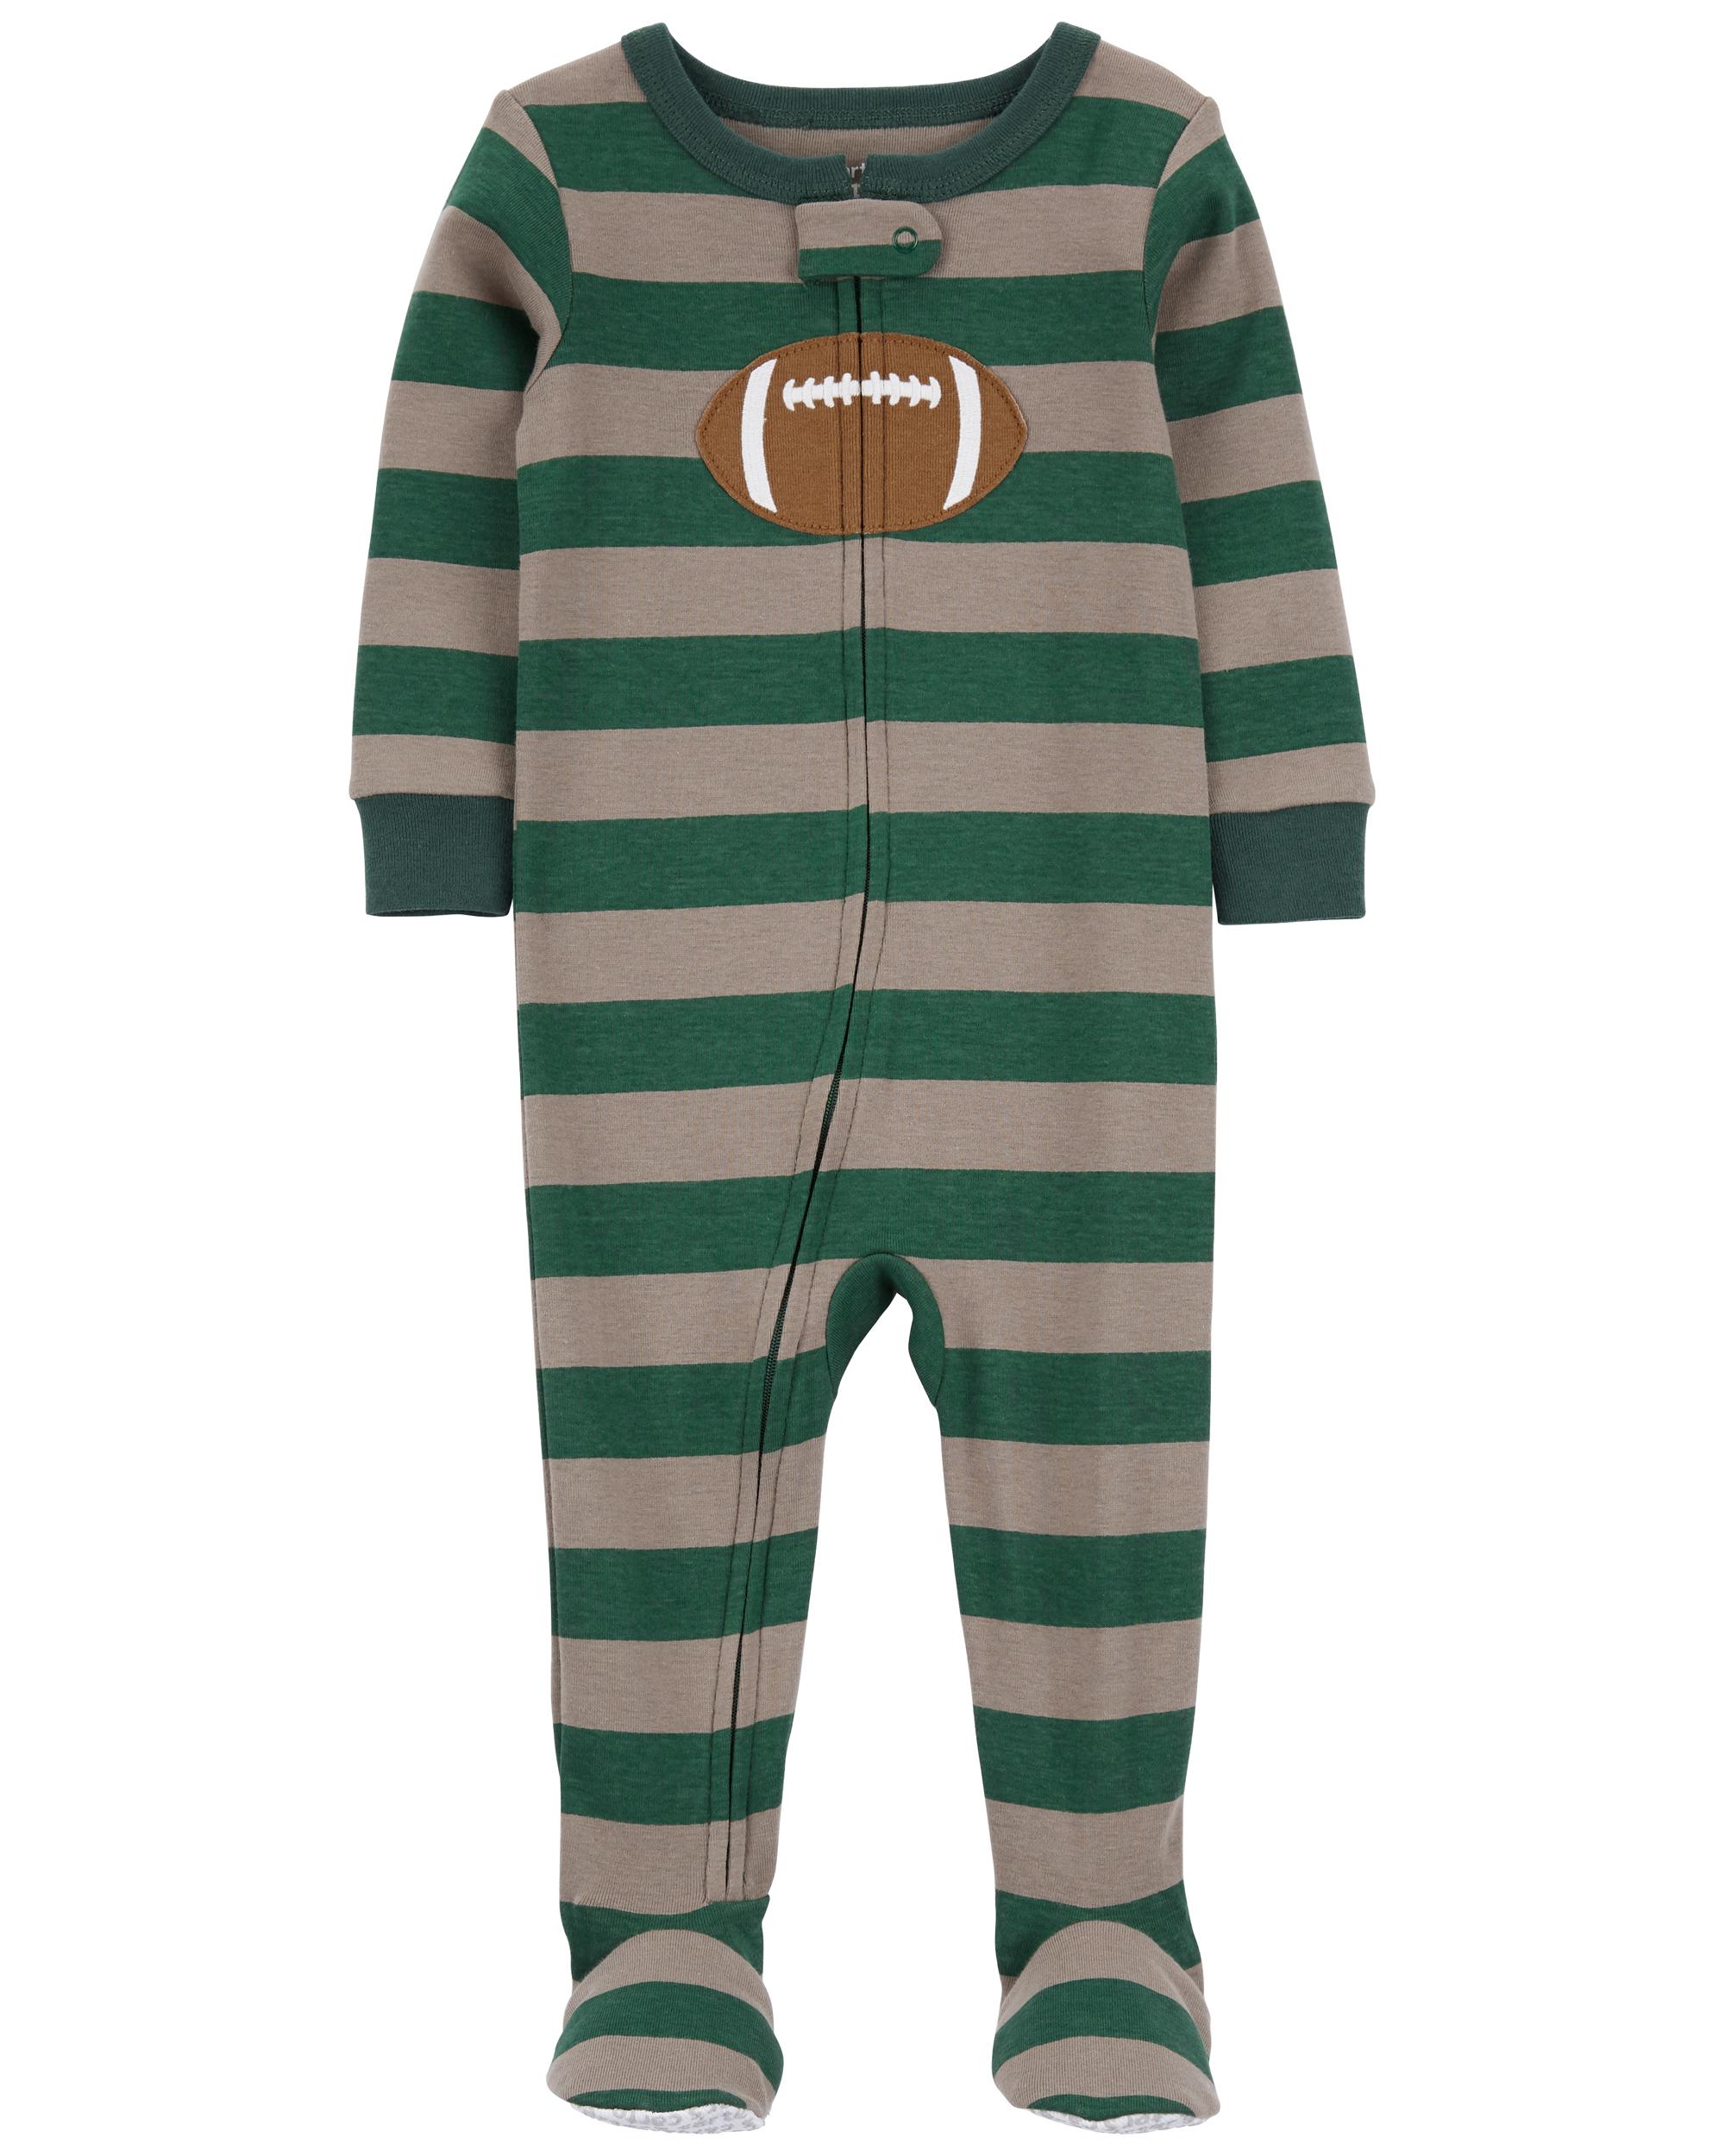 Toddler 1-Piece Football 100% Snug Fit Cotton Footie Pyjamas